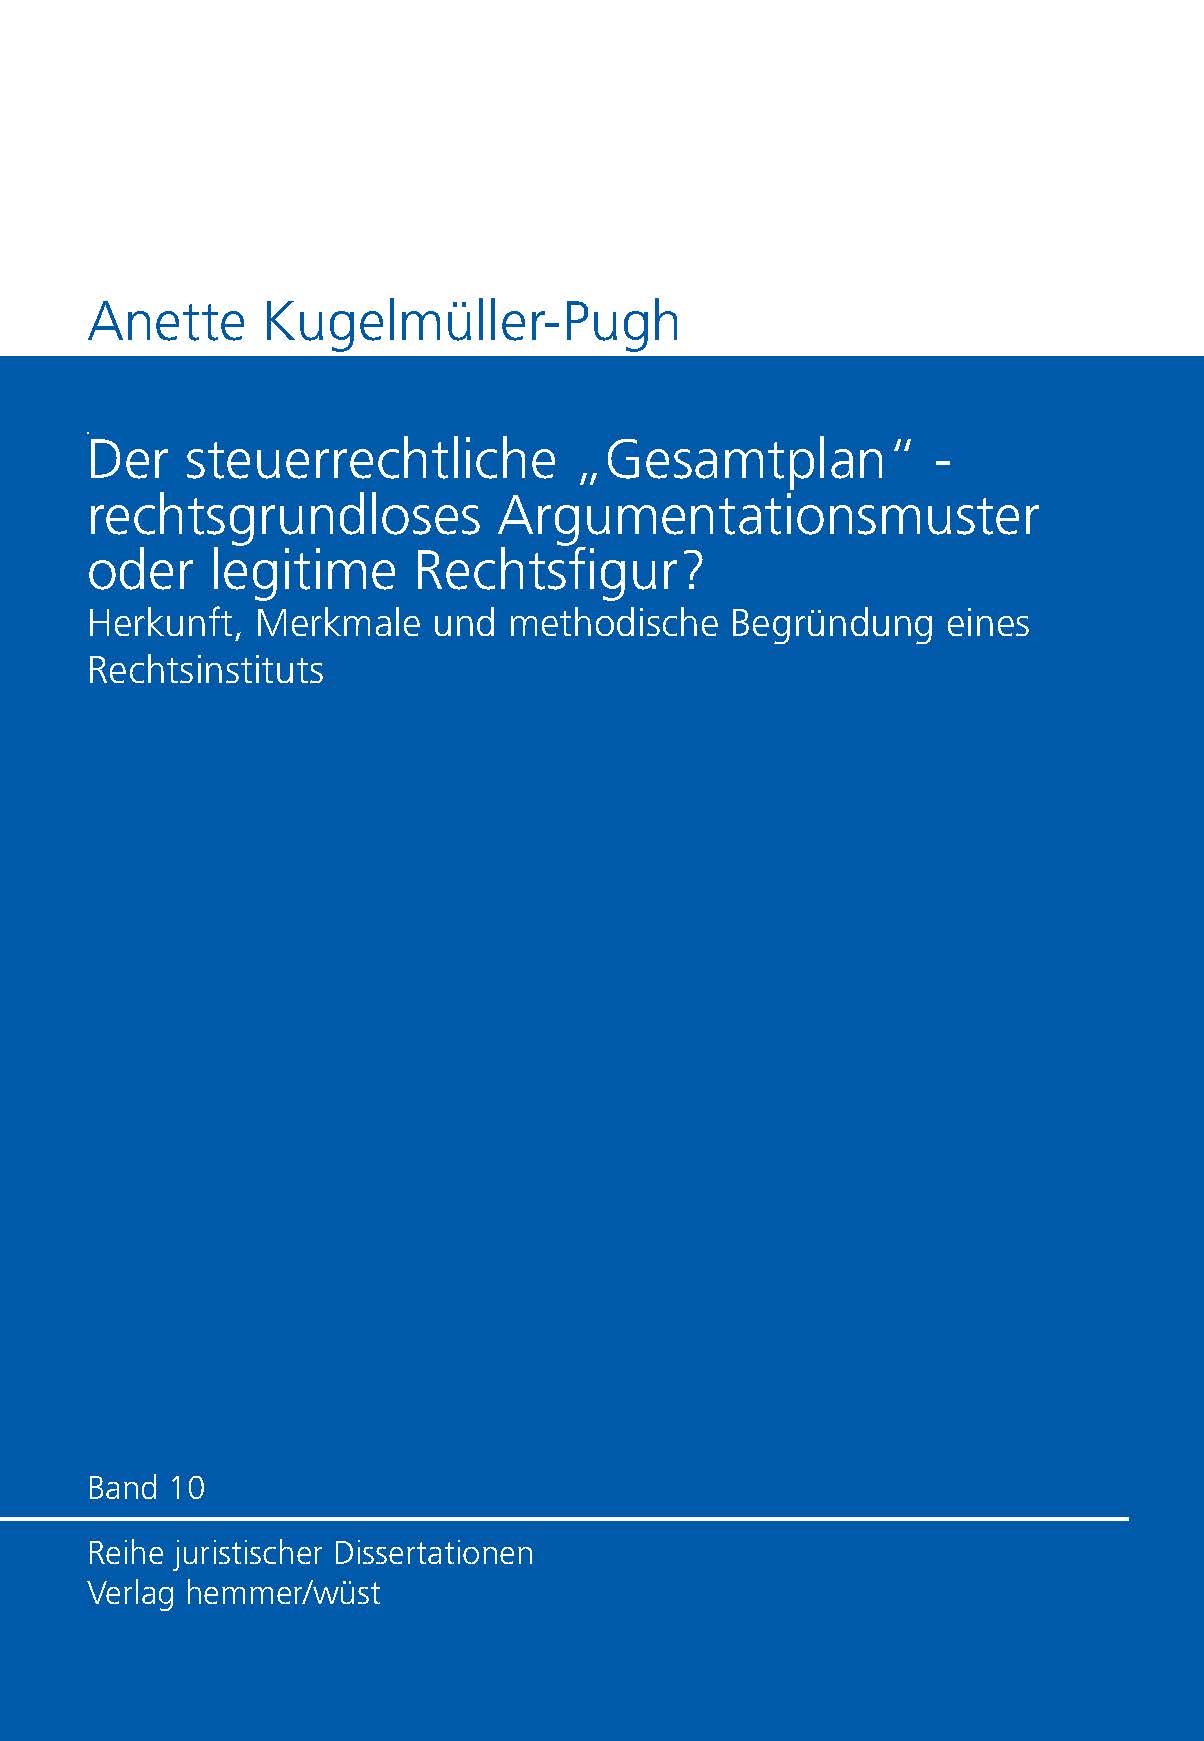 Band 10: Anette Kugelmüller-Pugh - Der steuerrechtliche Gesamtplan - rechtsgrundloses Argumentationsmuster oder legitime Rechtsfigur?